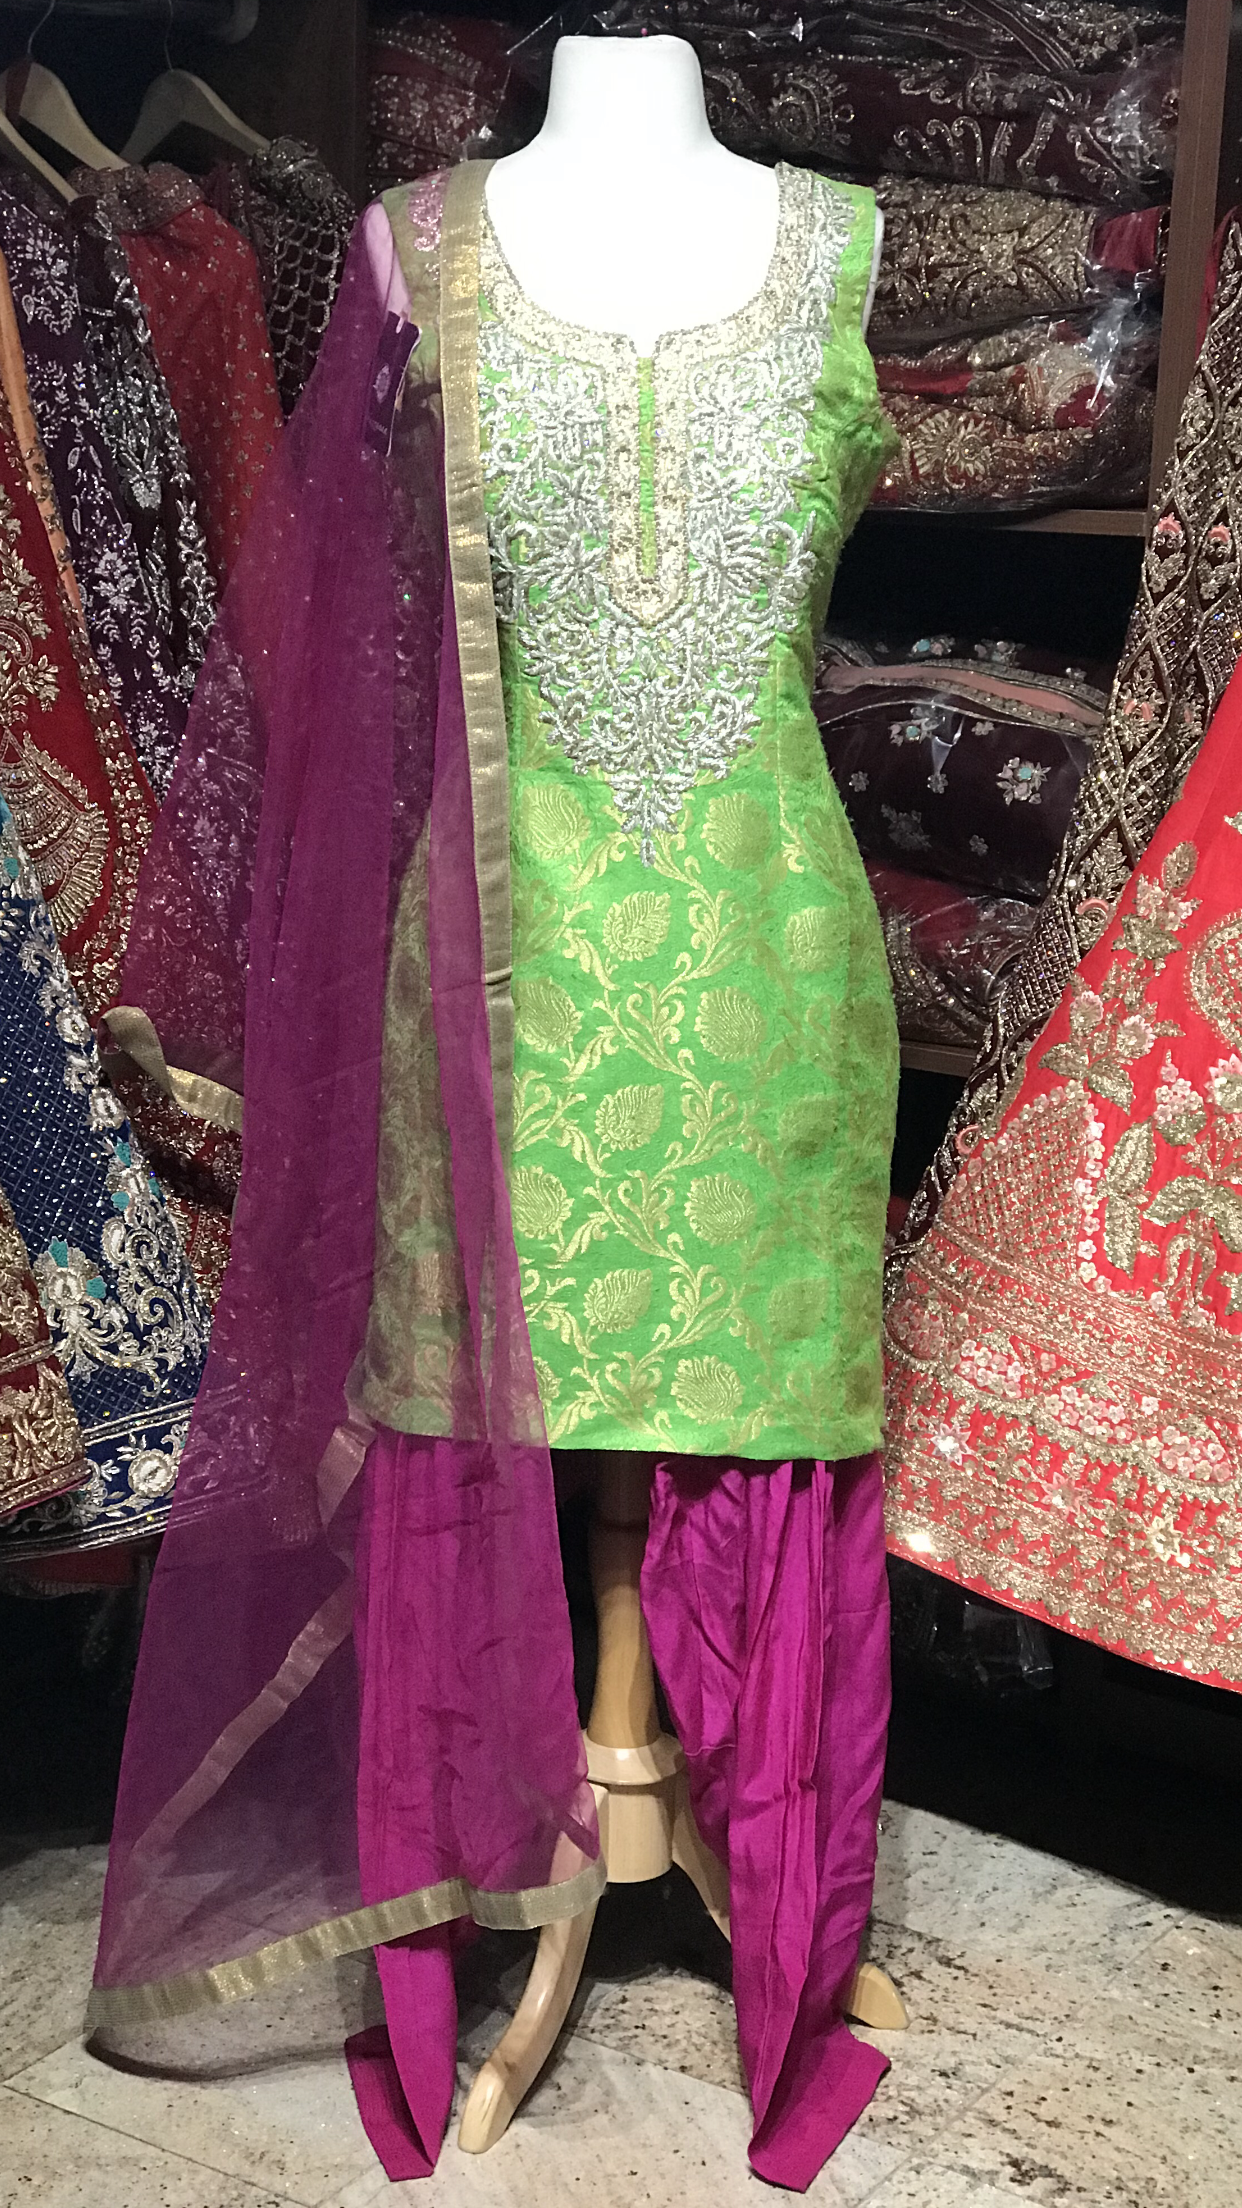 Buy in Bulk readymade Patiala Suit wholesale online in Surat